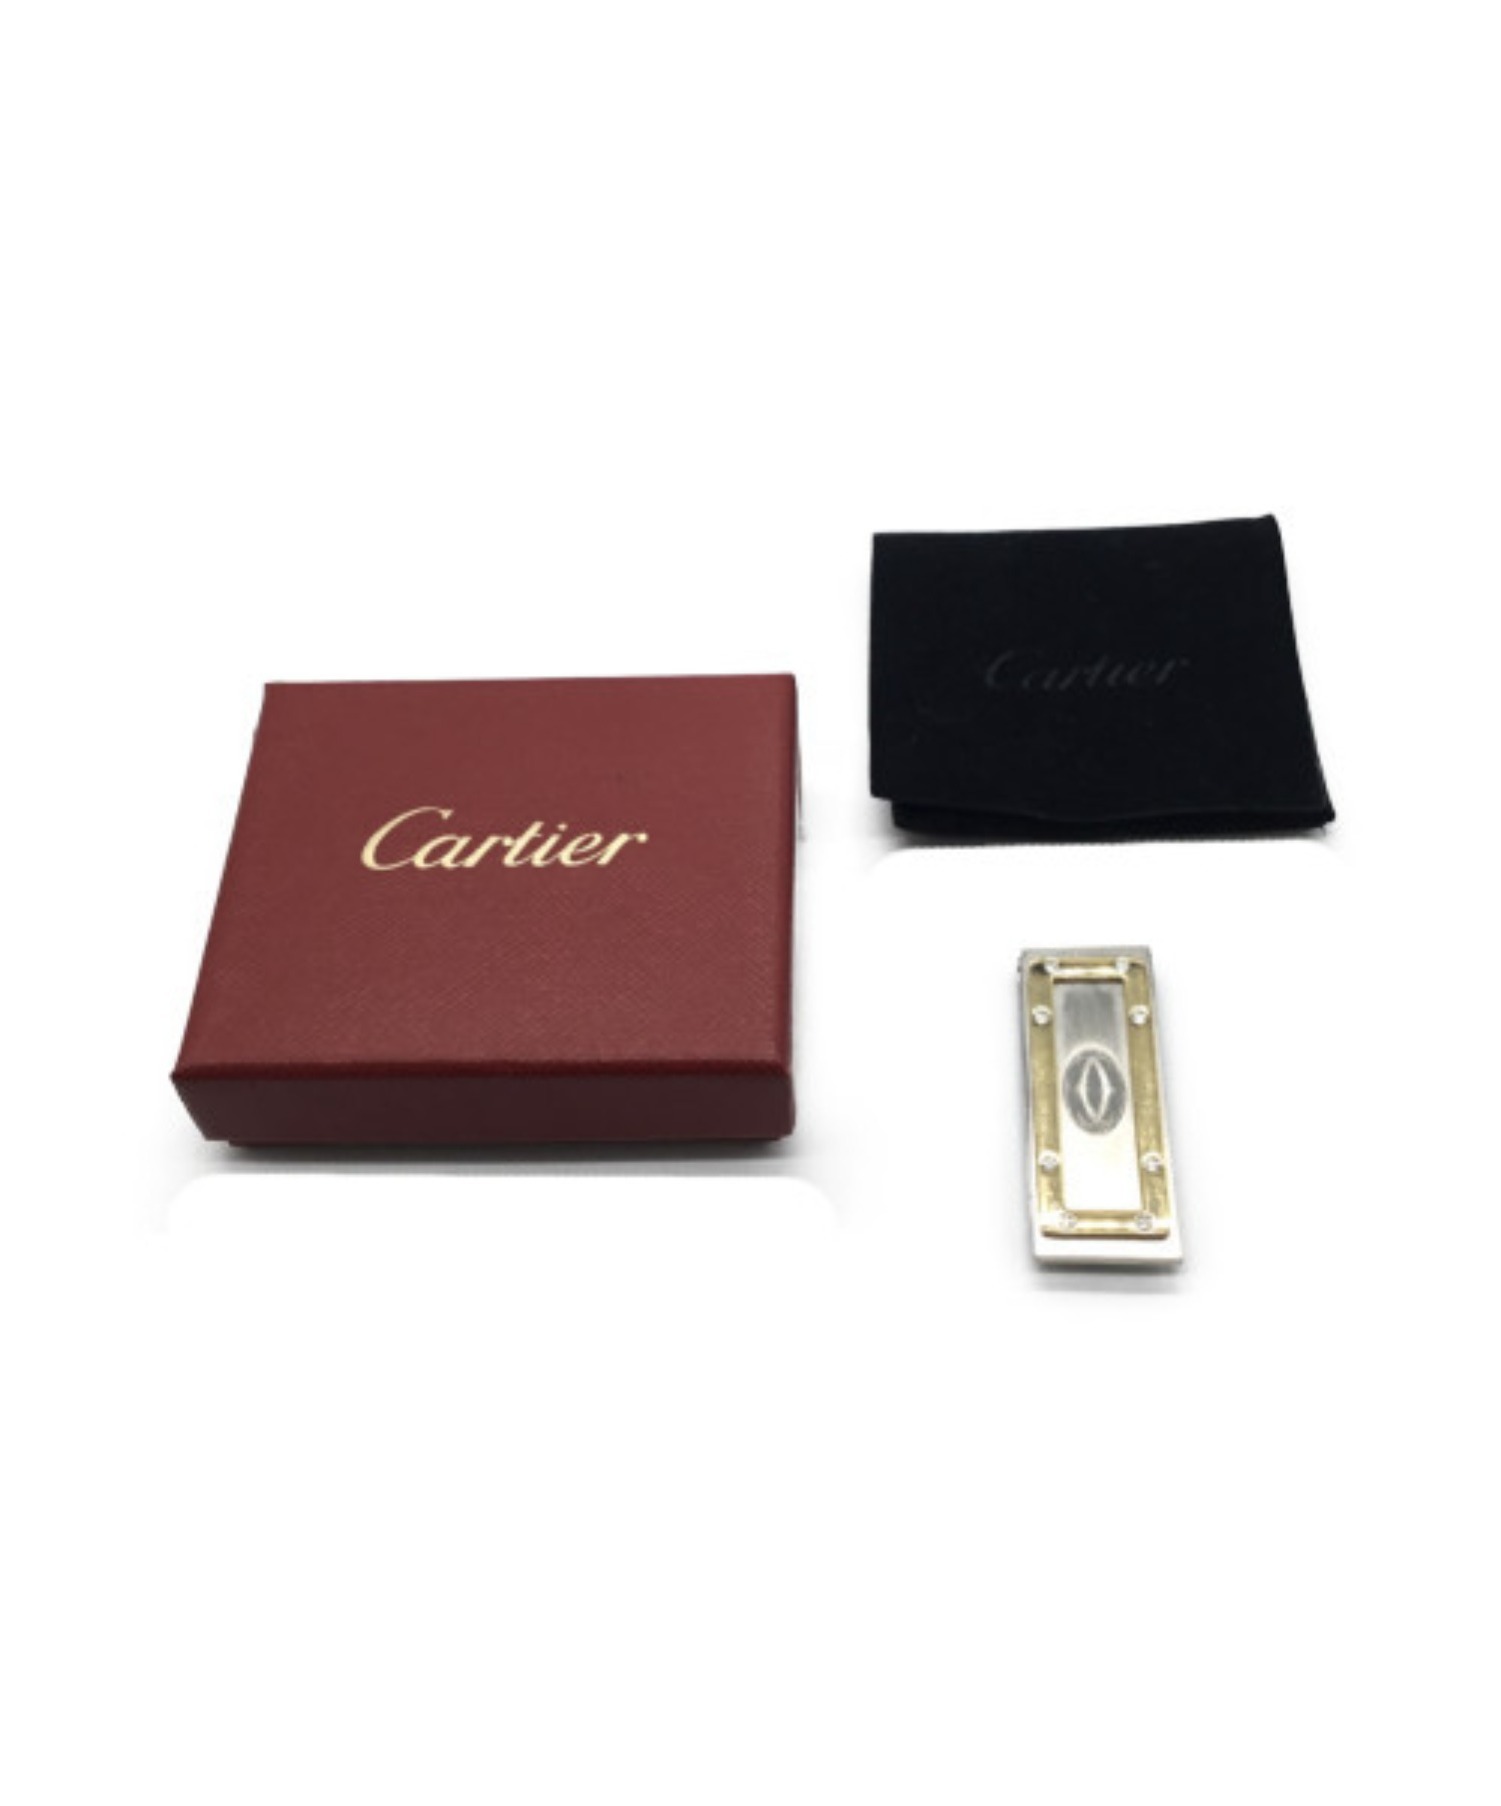 Cartier (カルティエ) マネークリップ